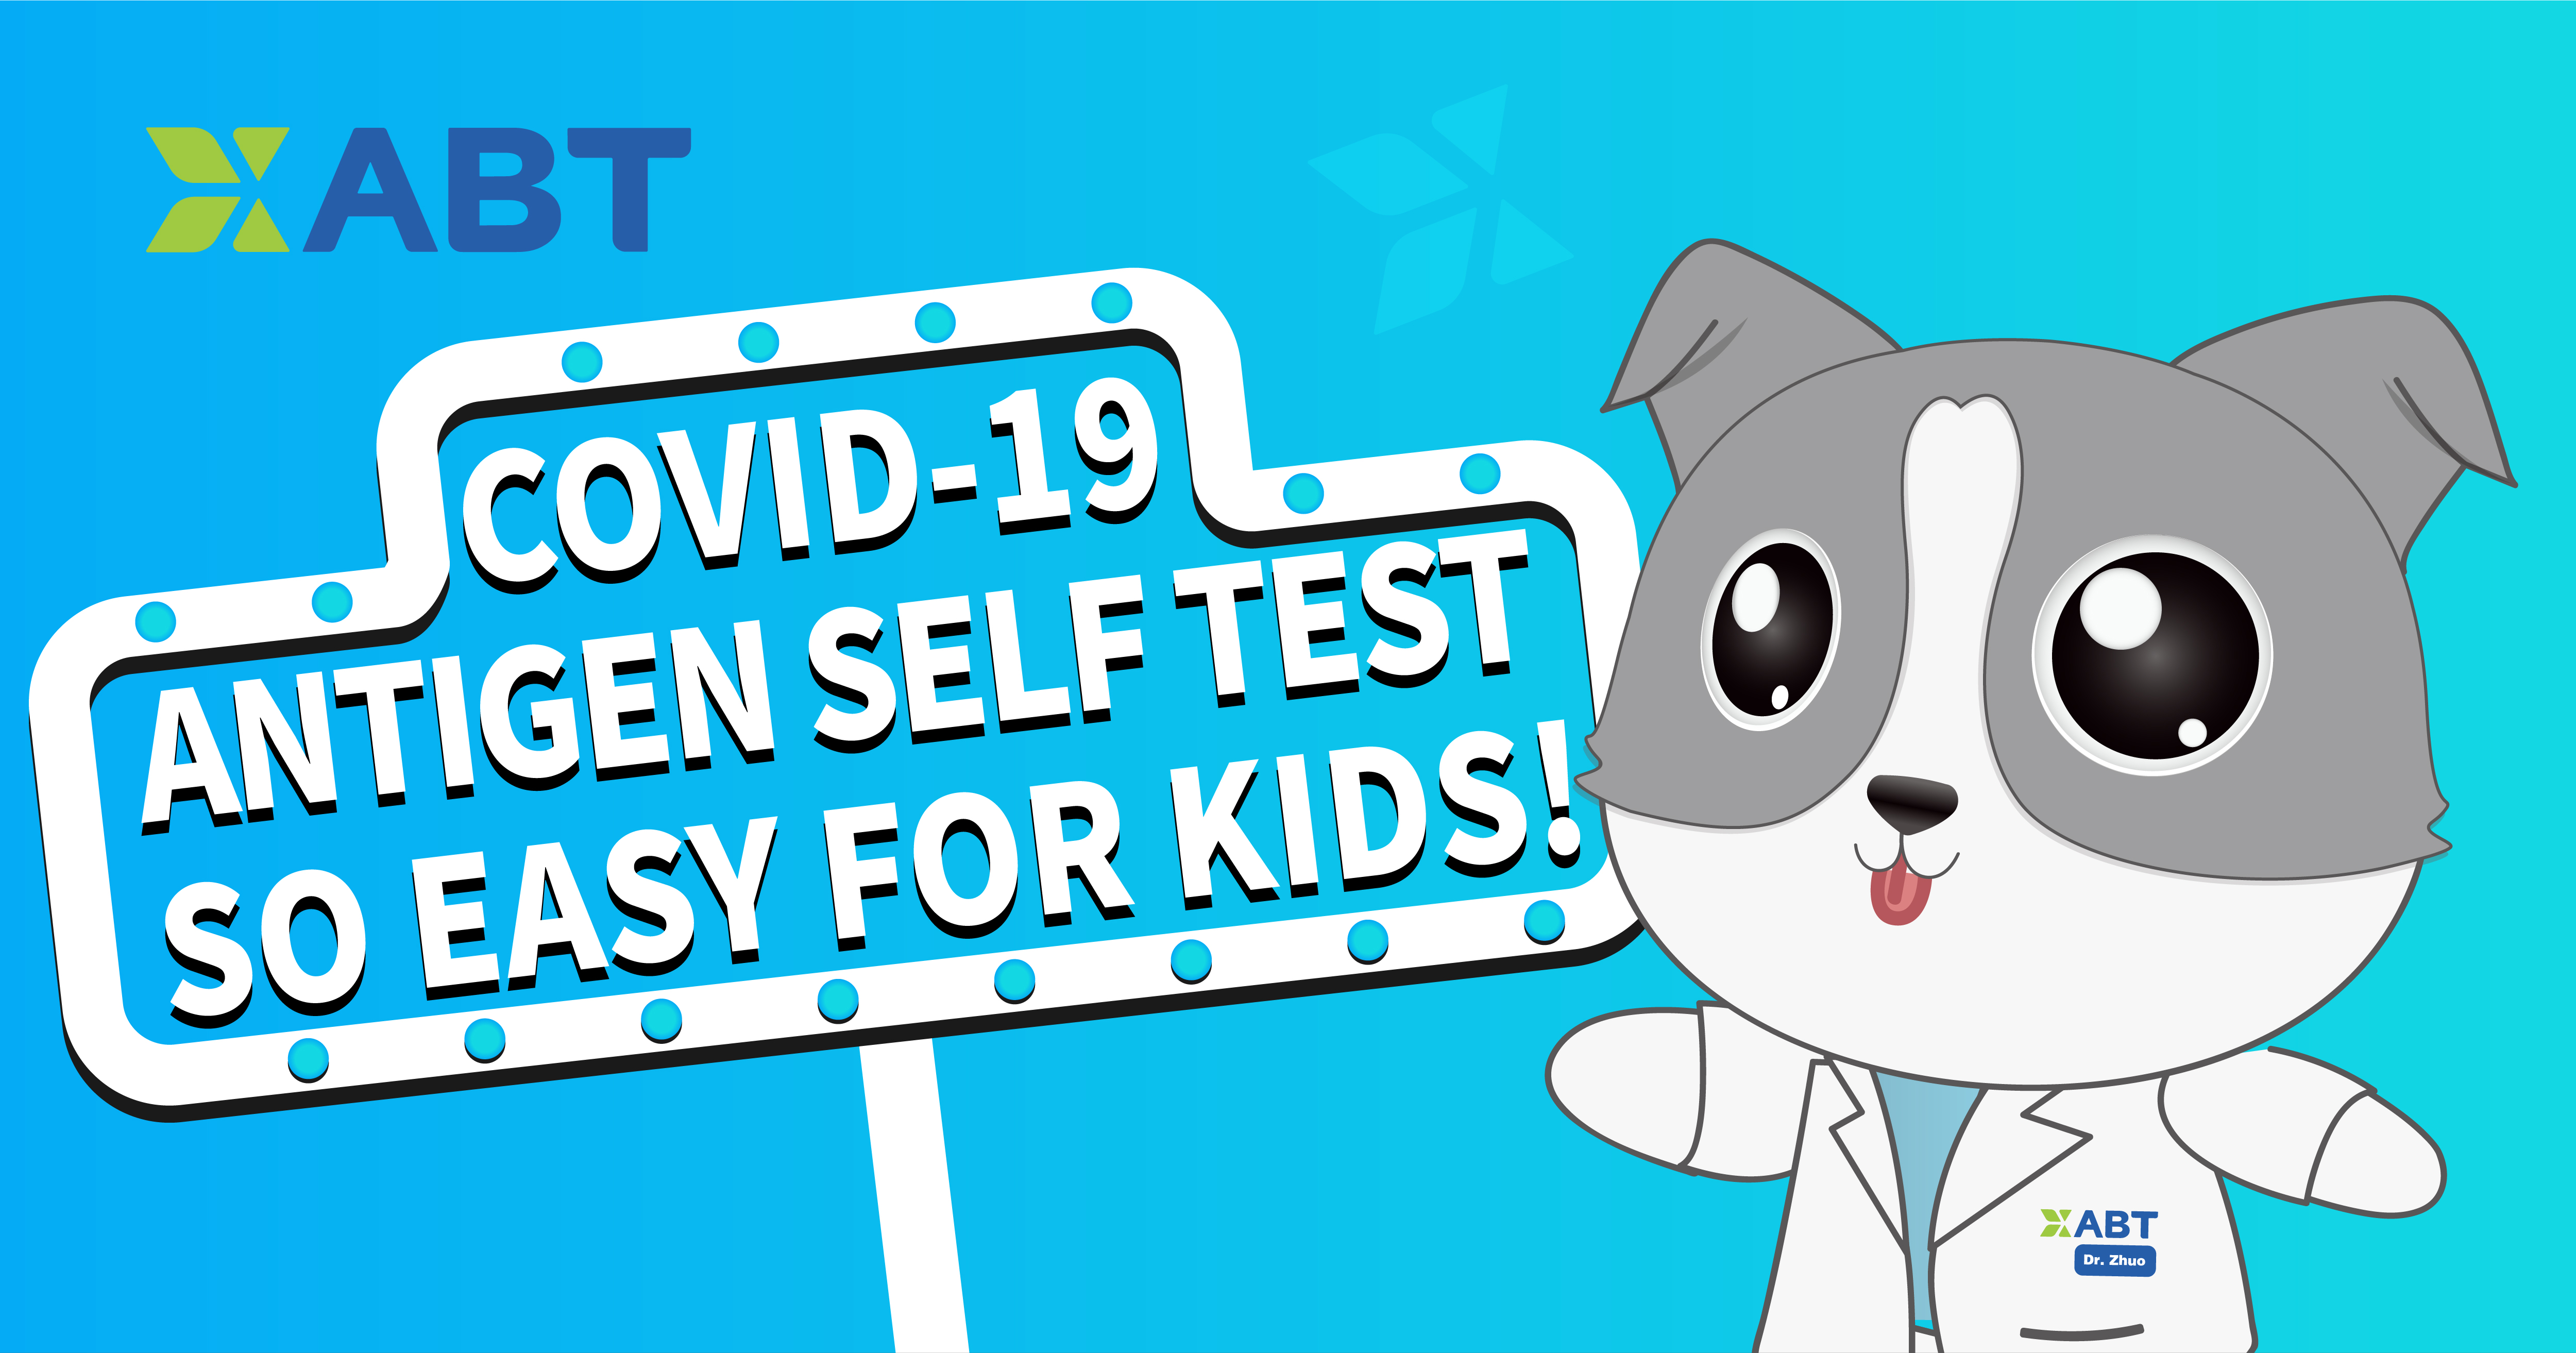 Covid-19 Antigen Self Test, So Easy for Kids!